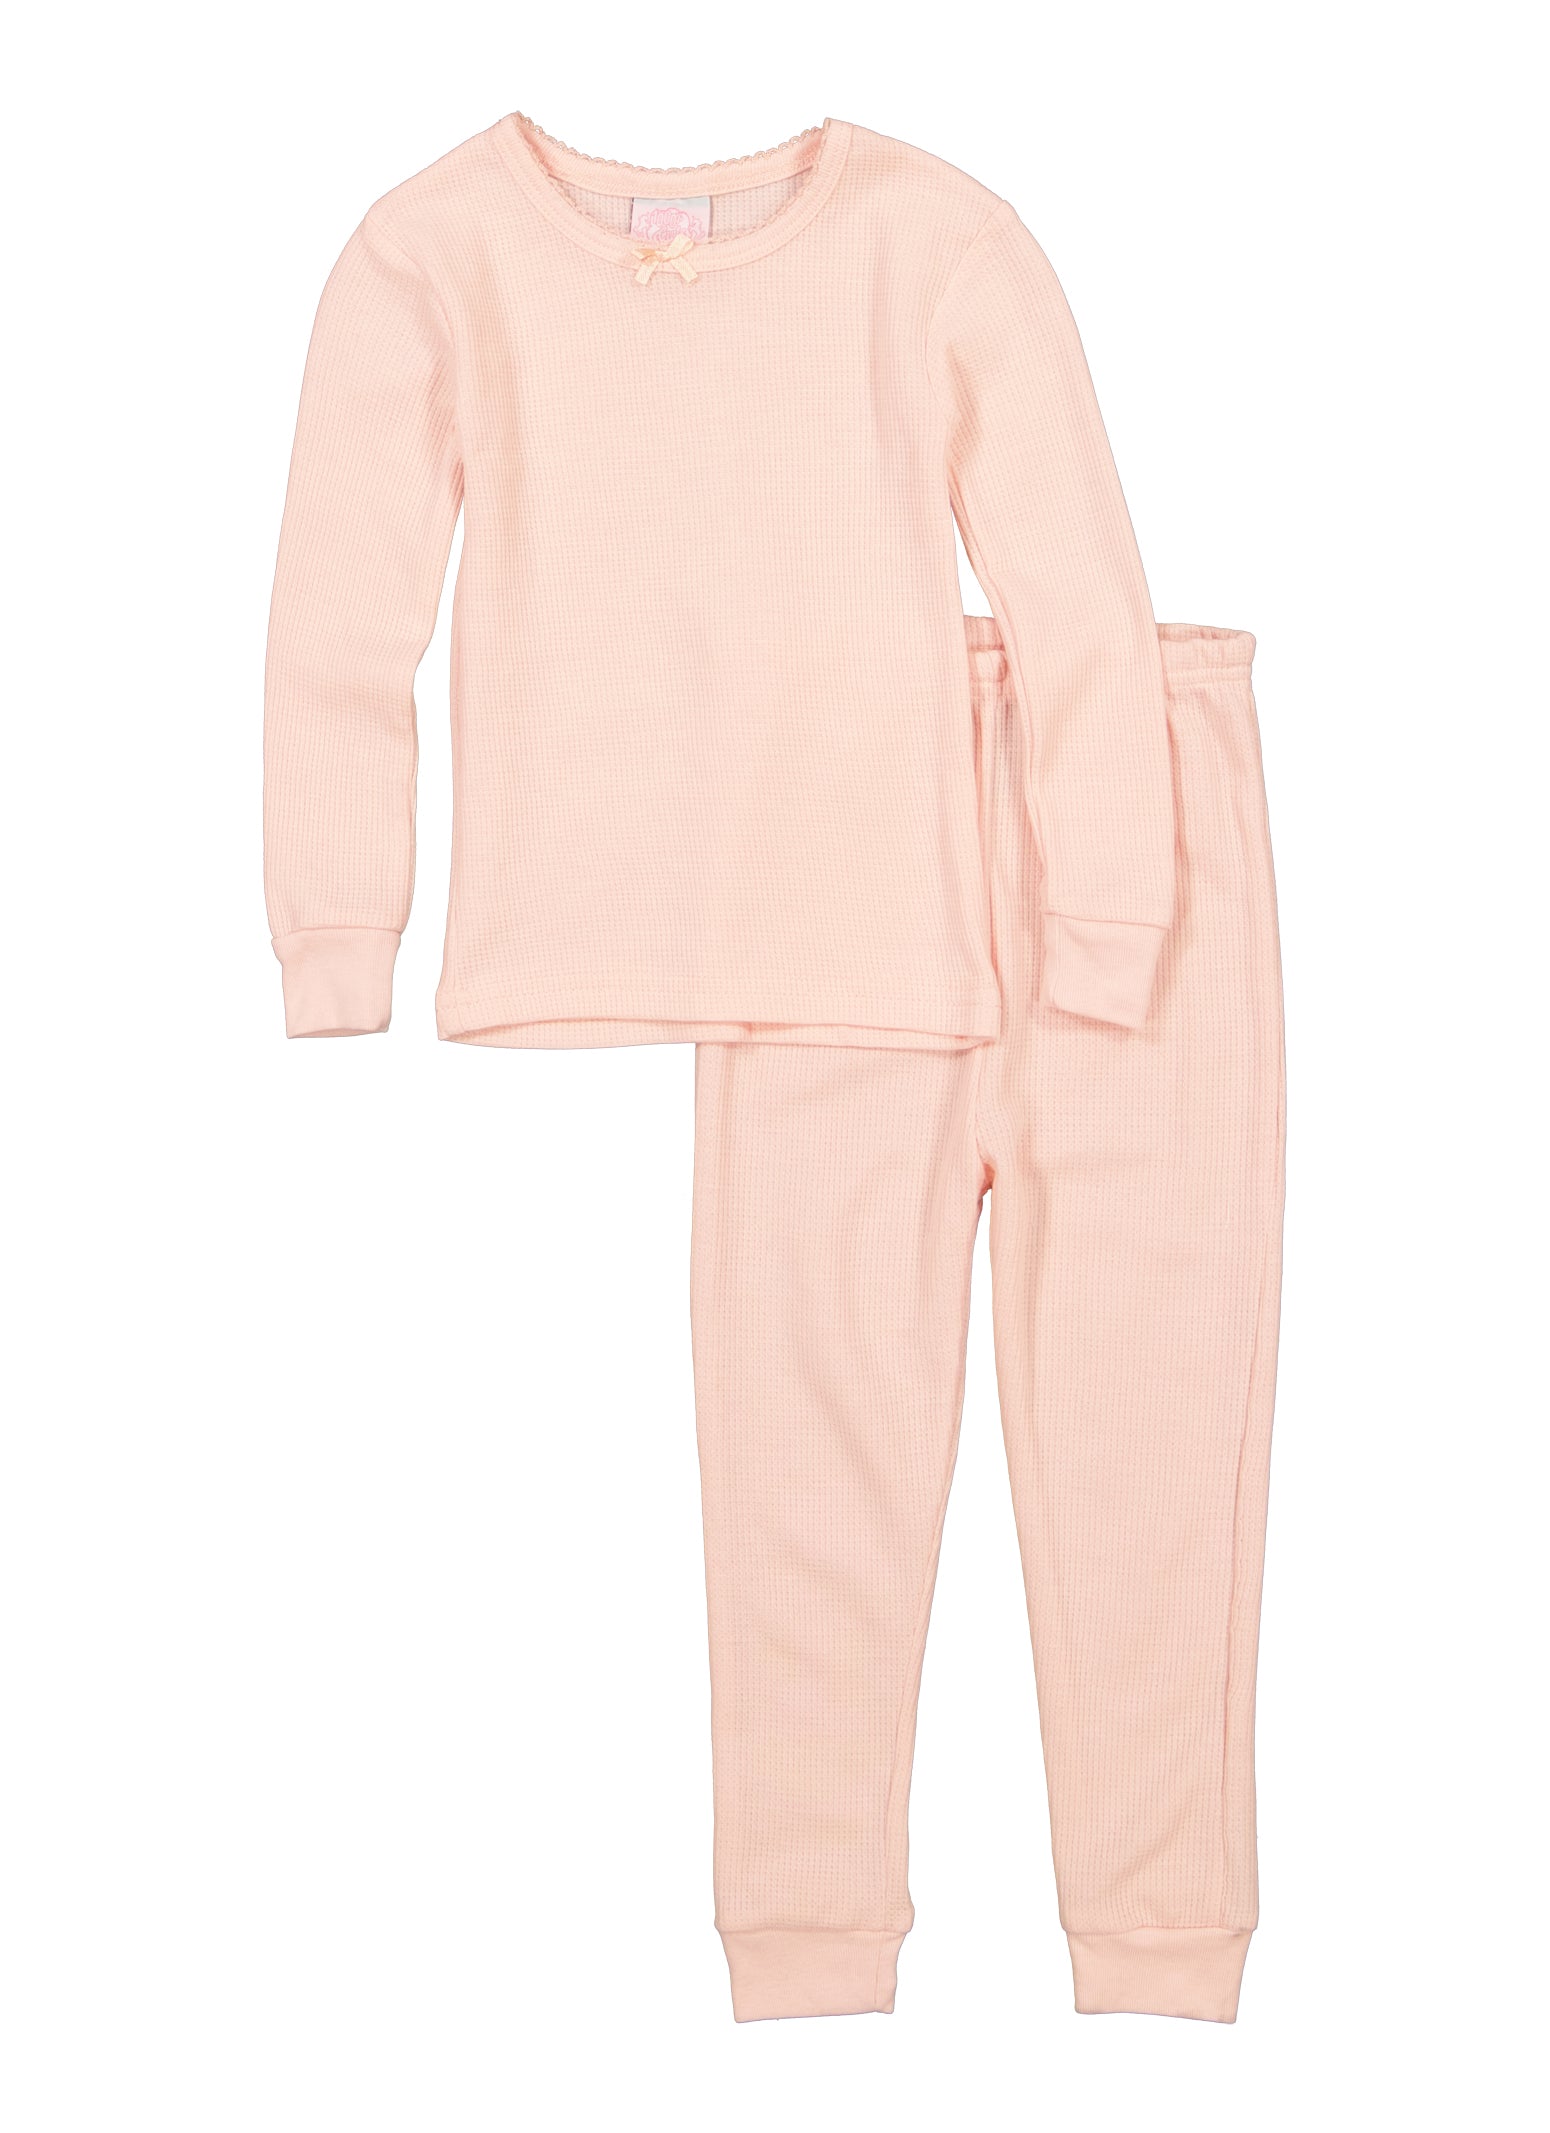 Girls Thermal Pajama Top and Pants - Blush